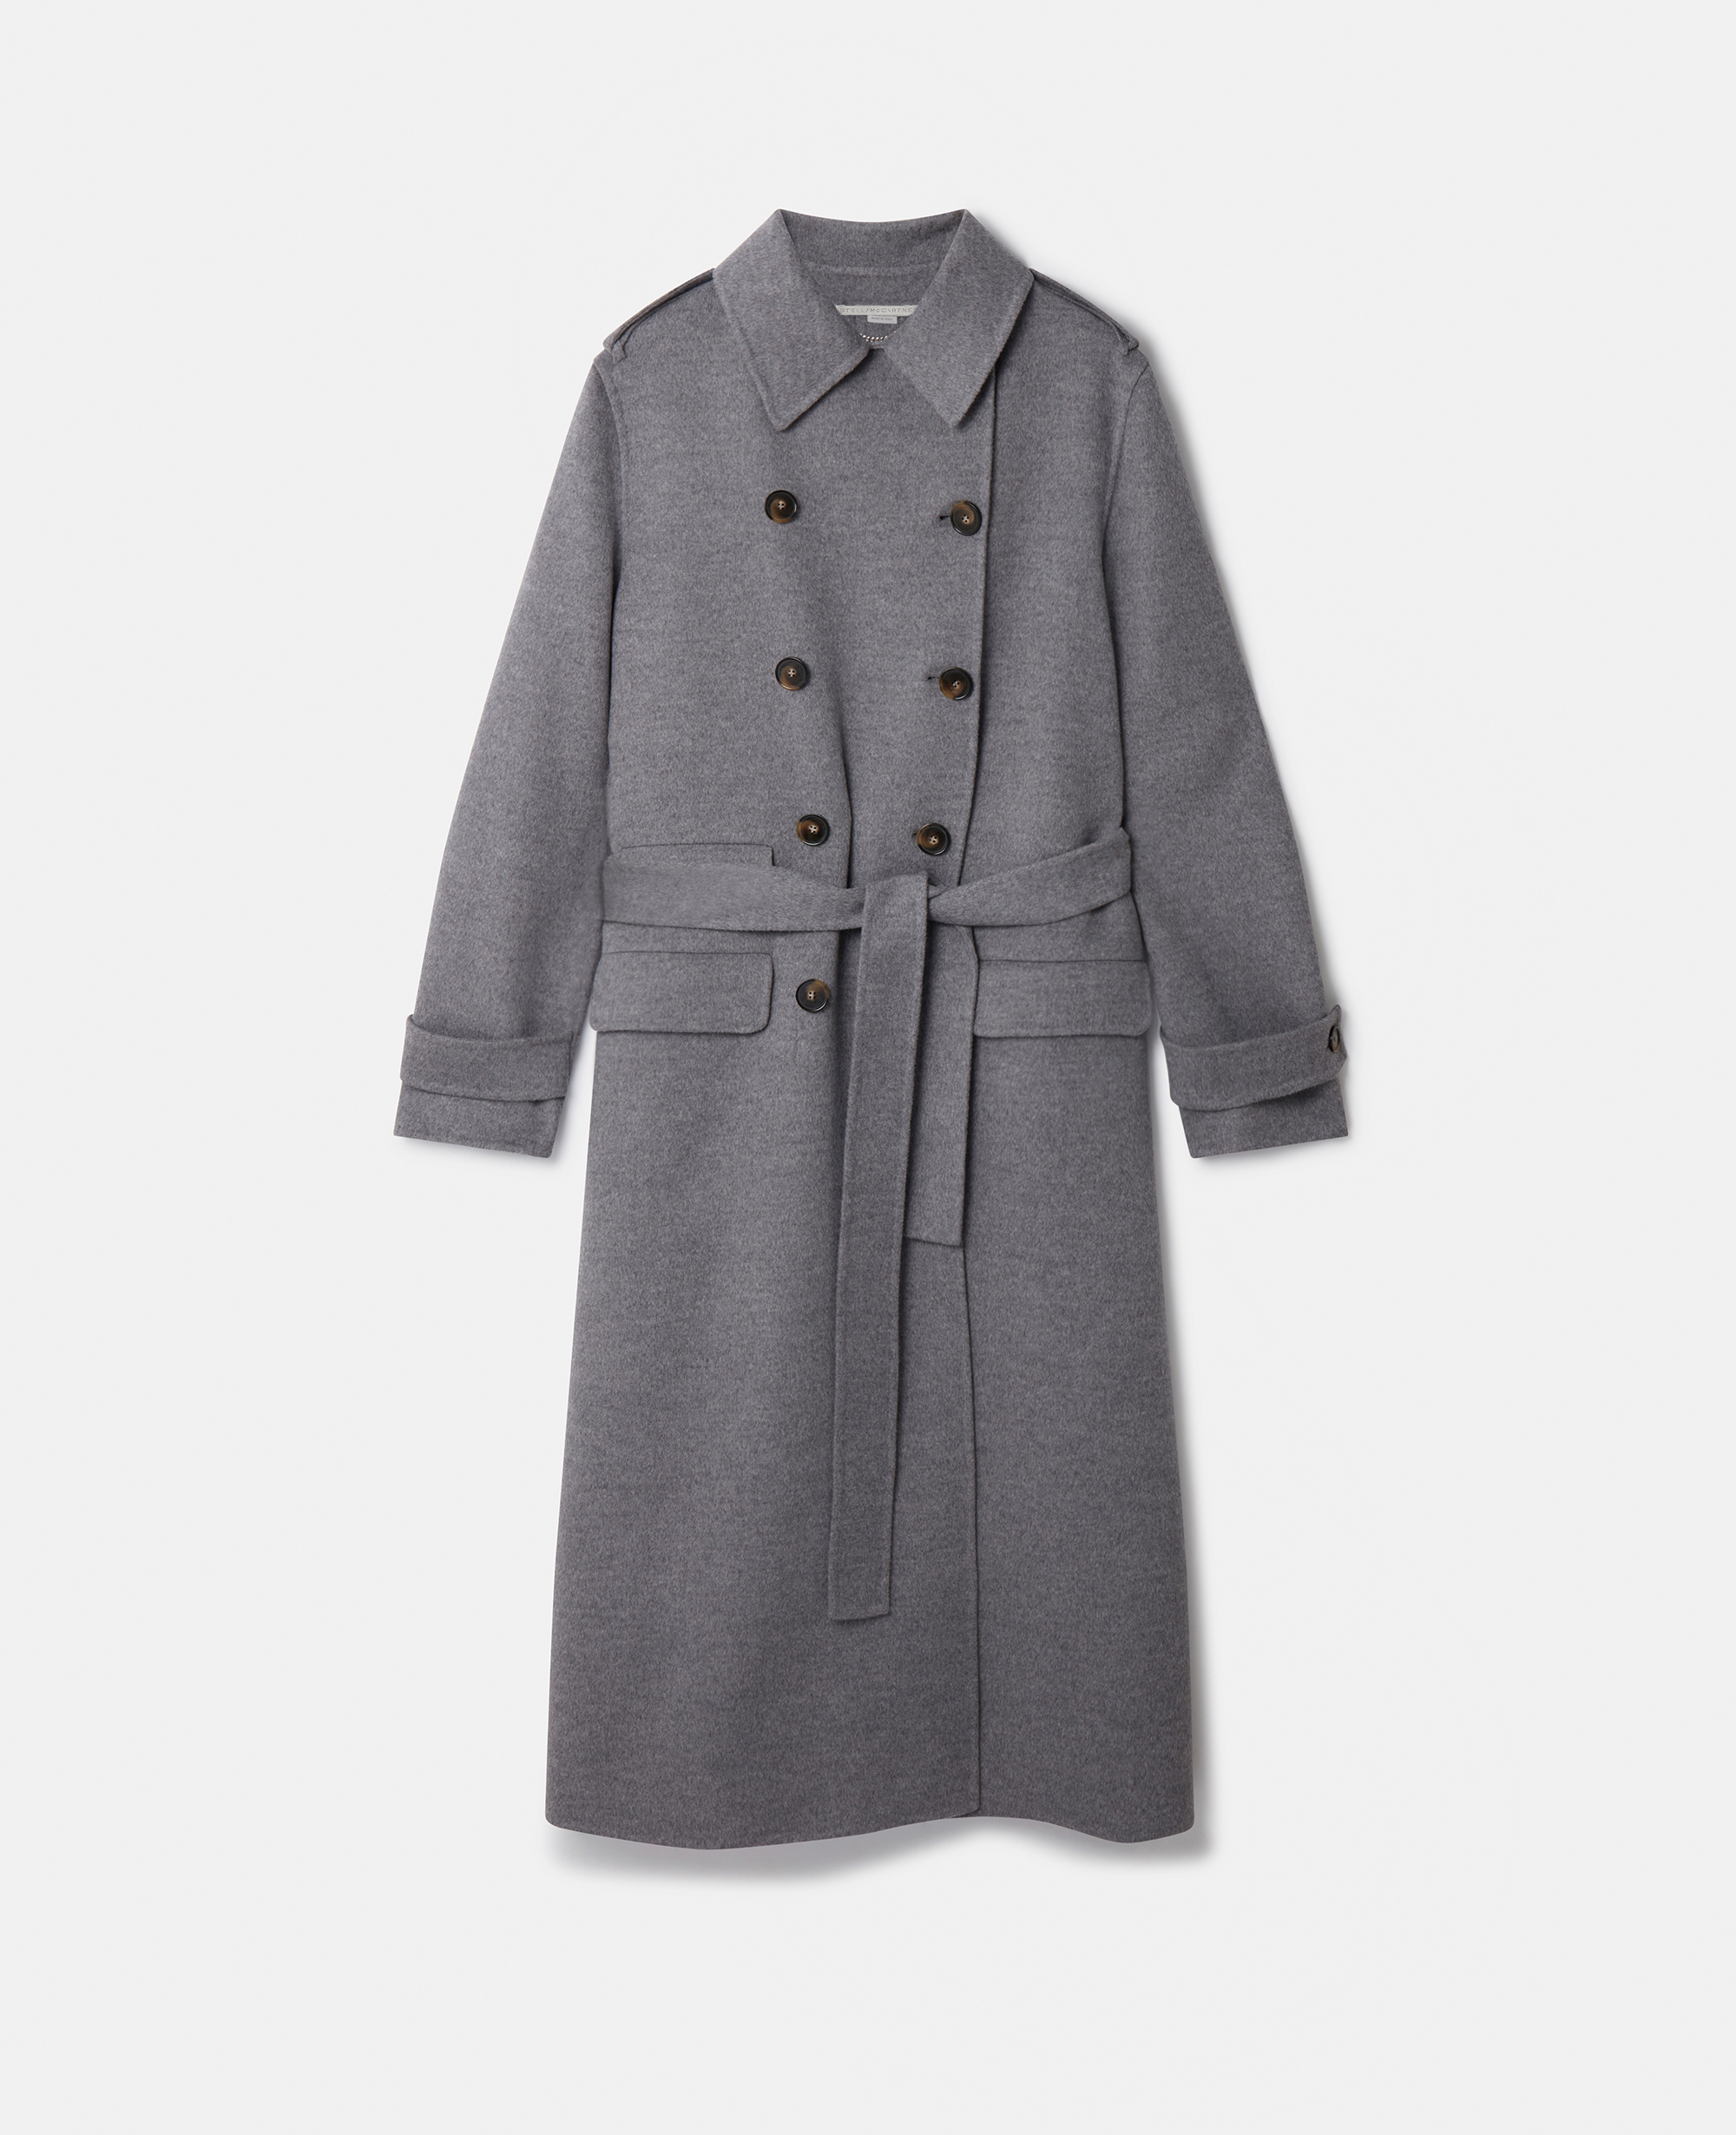 Stella Mccartney Wool Trench Coat In Grey Melange